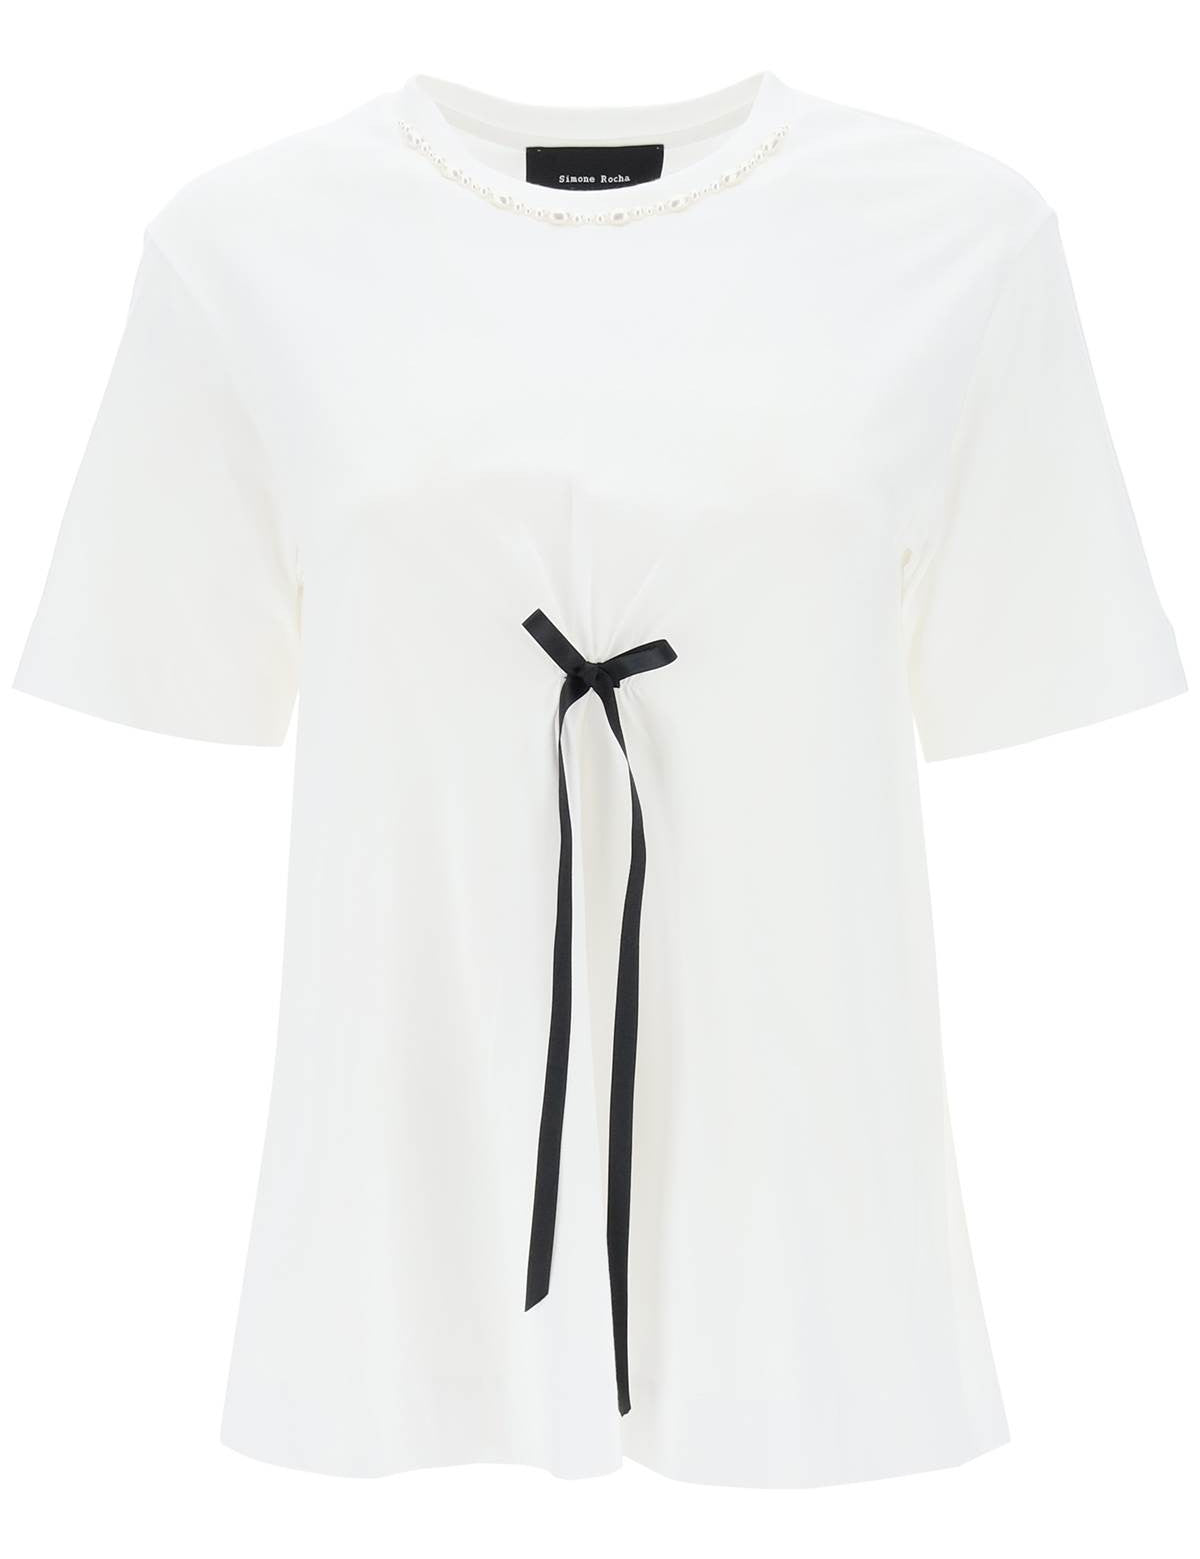 simone-rocha-a-line-t-shirt-with-bow-detail.jpg